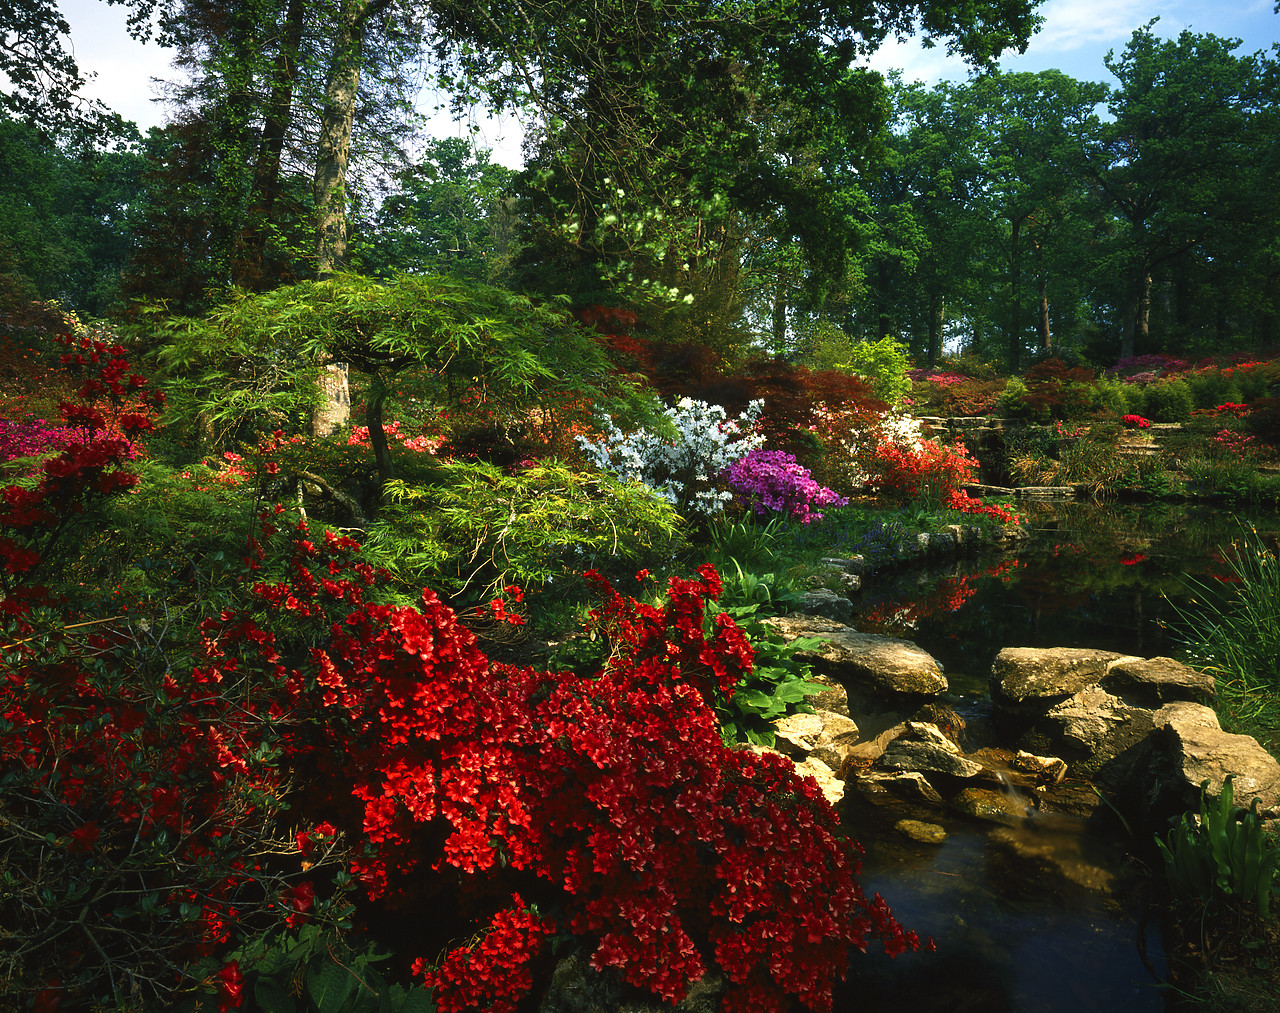 #902866-1 - Azalea Garden & Pond, Exbury Gardens, Hampshire, England